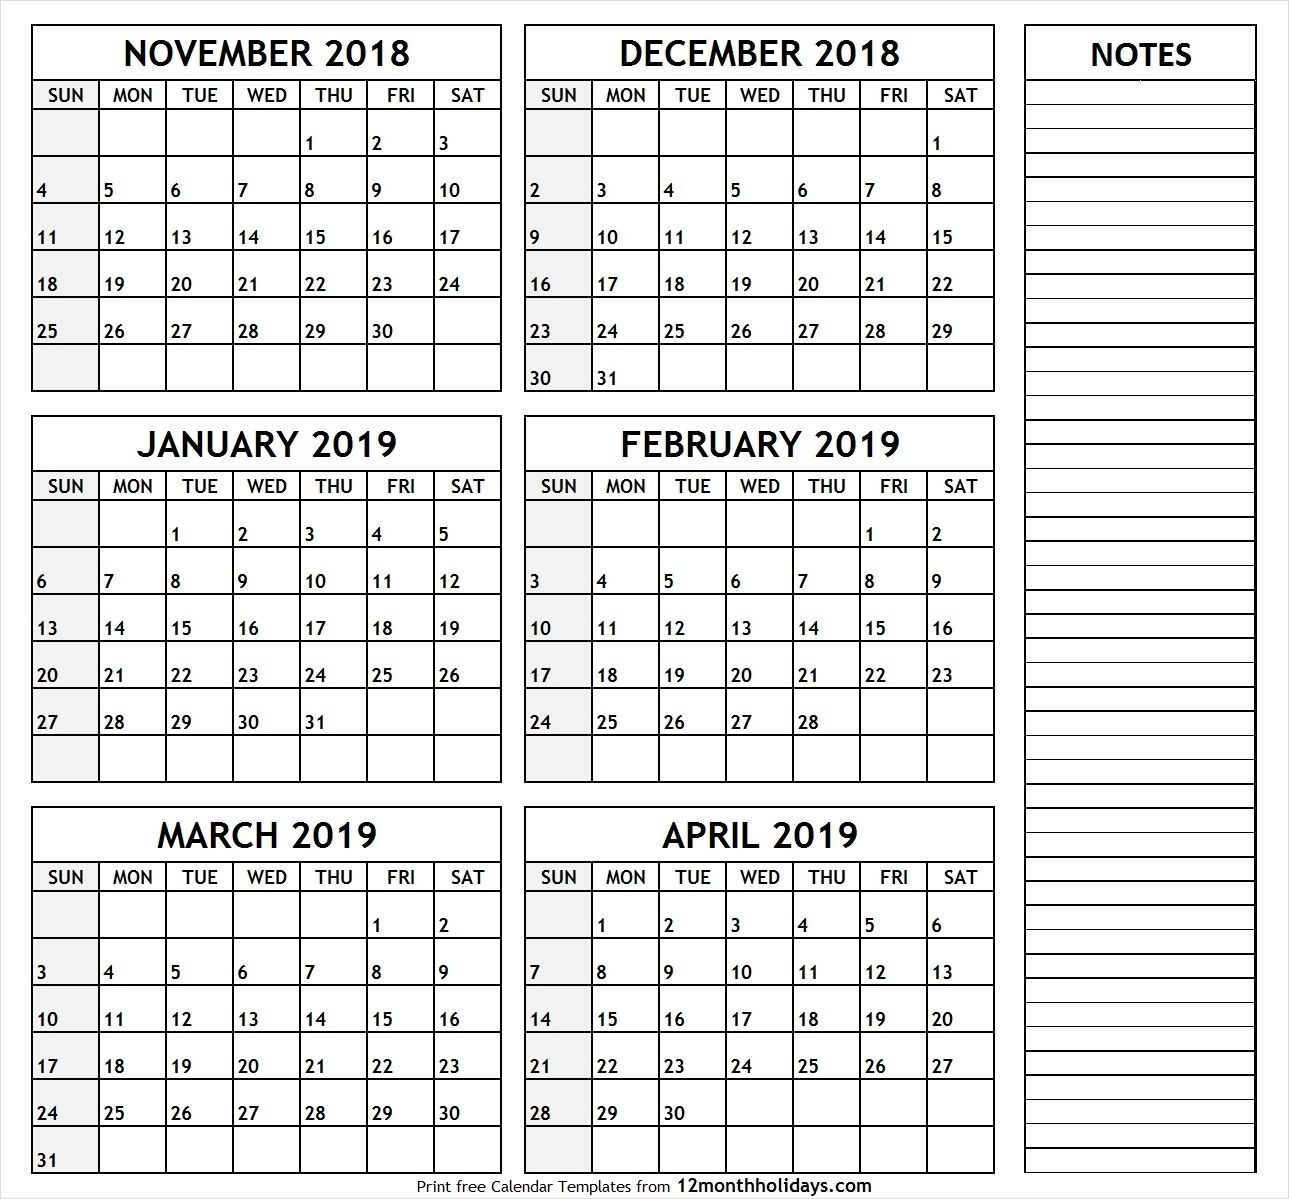 Printable Calendar November 2018 - April 2019 | November 2018 To Print Calendar 6 Months